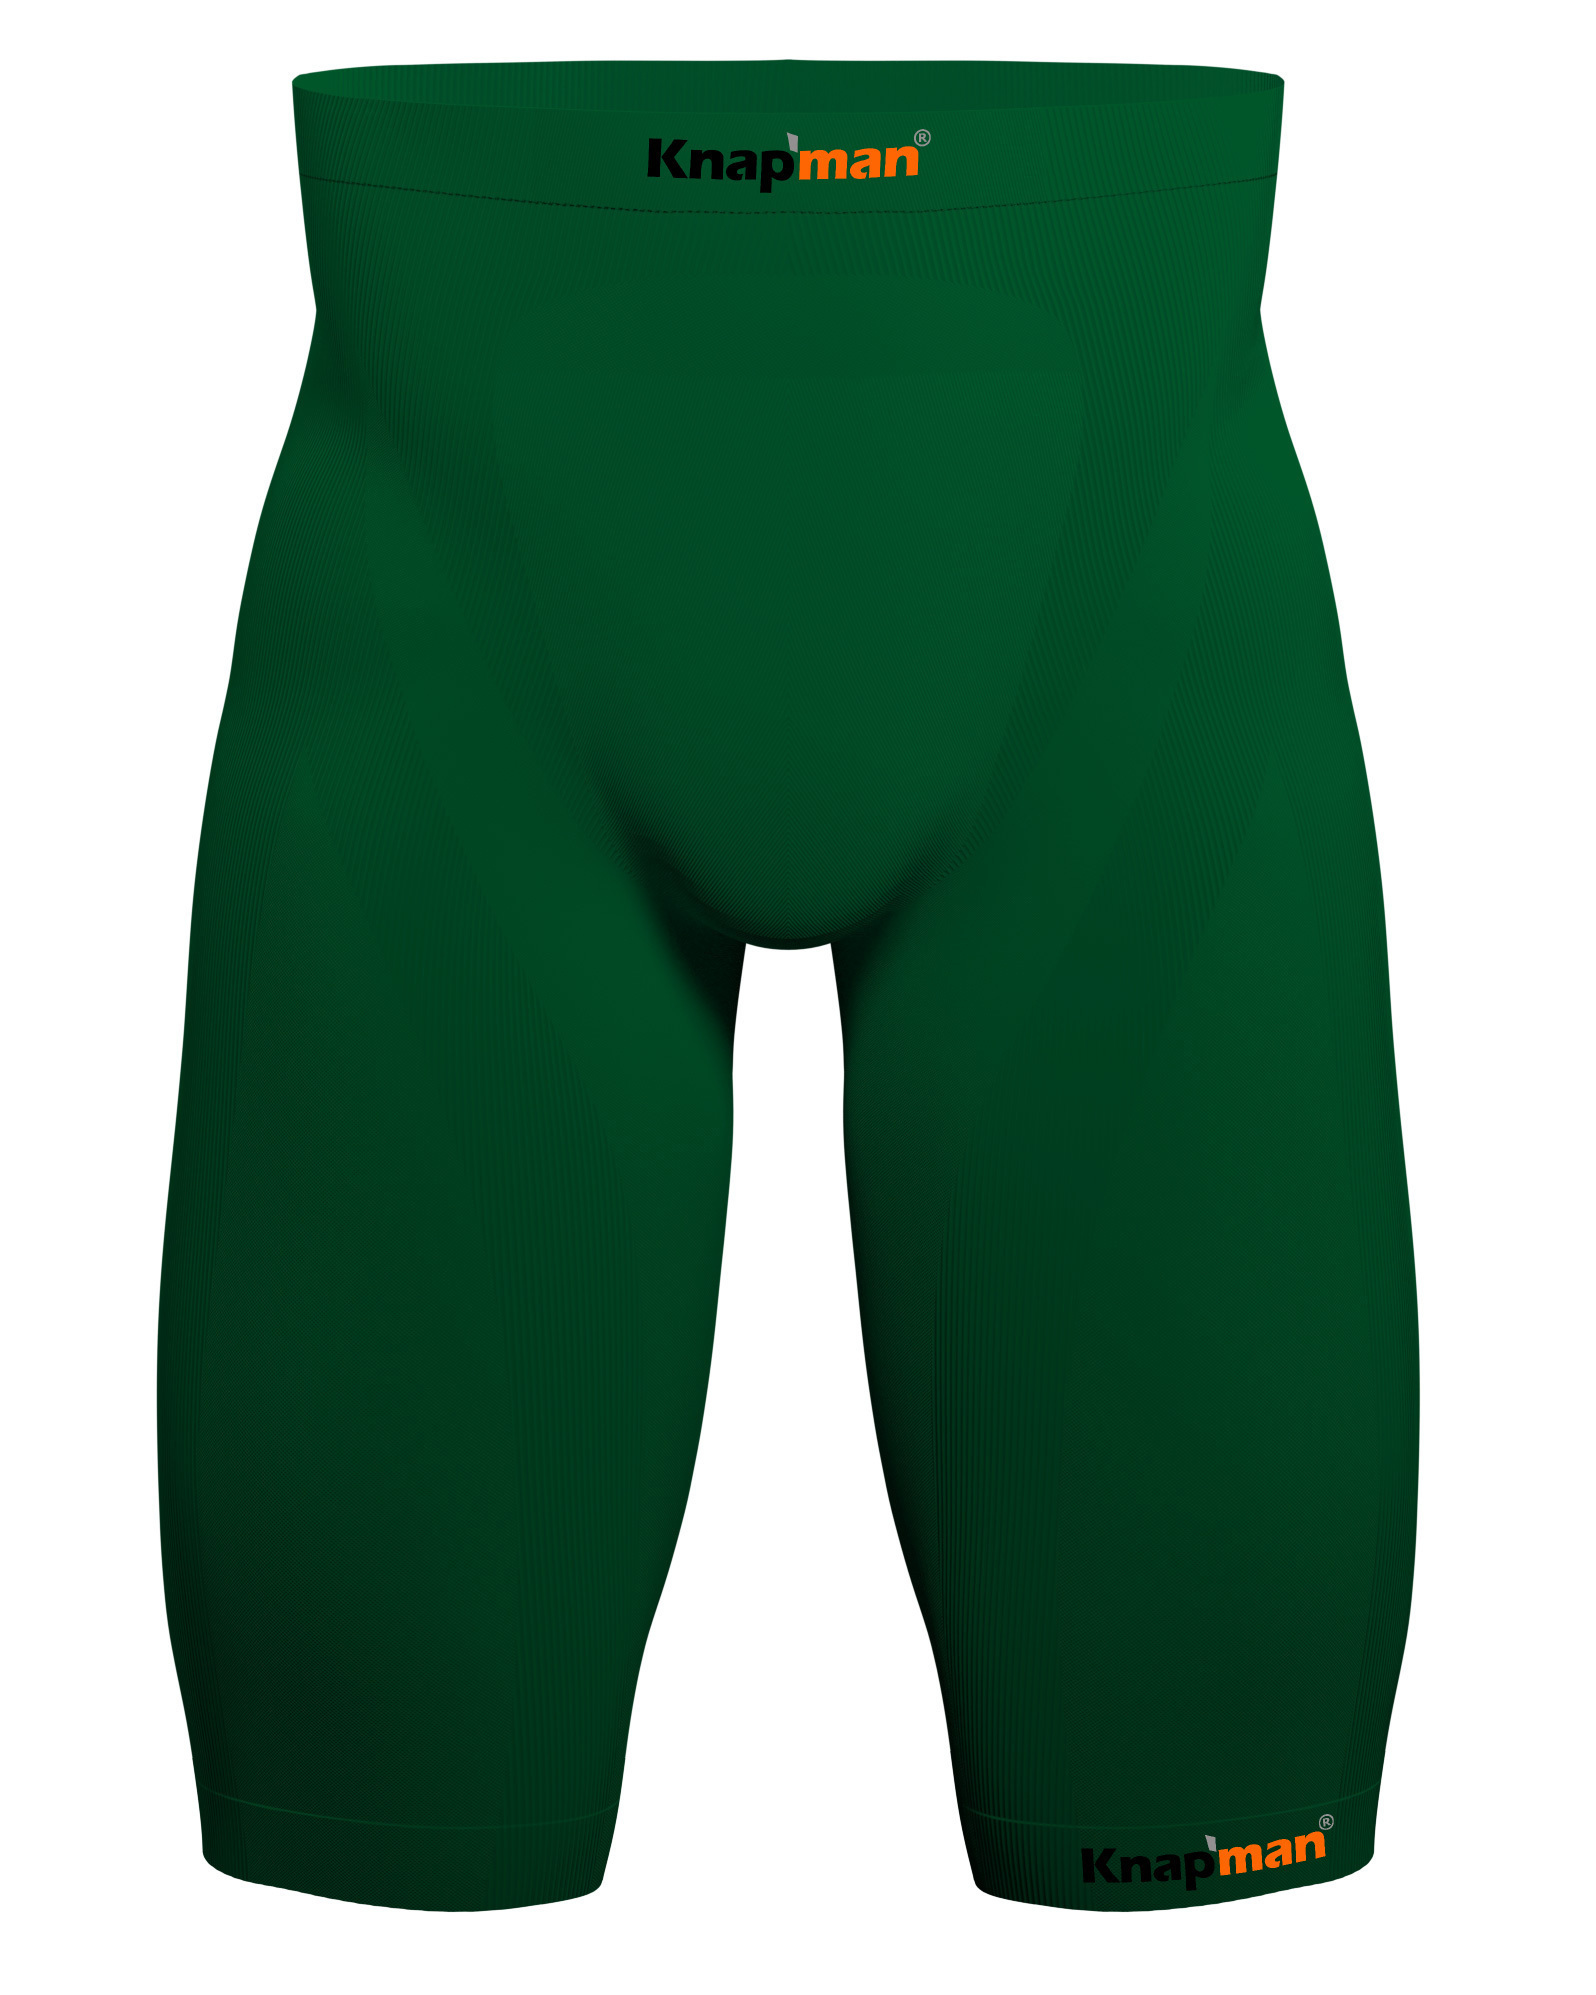 Knap'man Compression Shorts Green - 45%